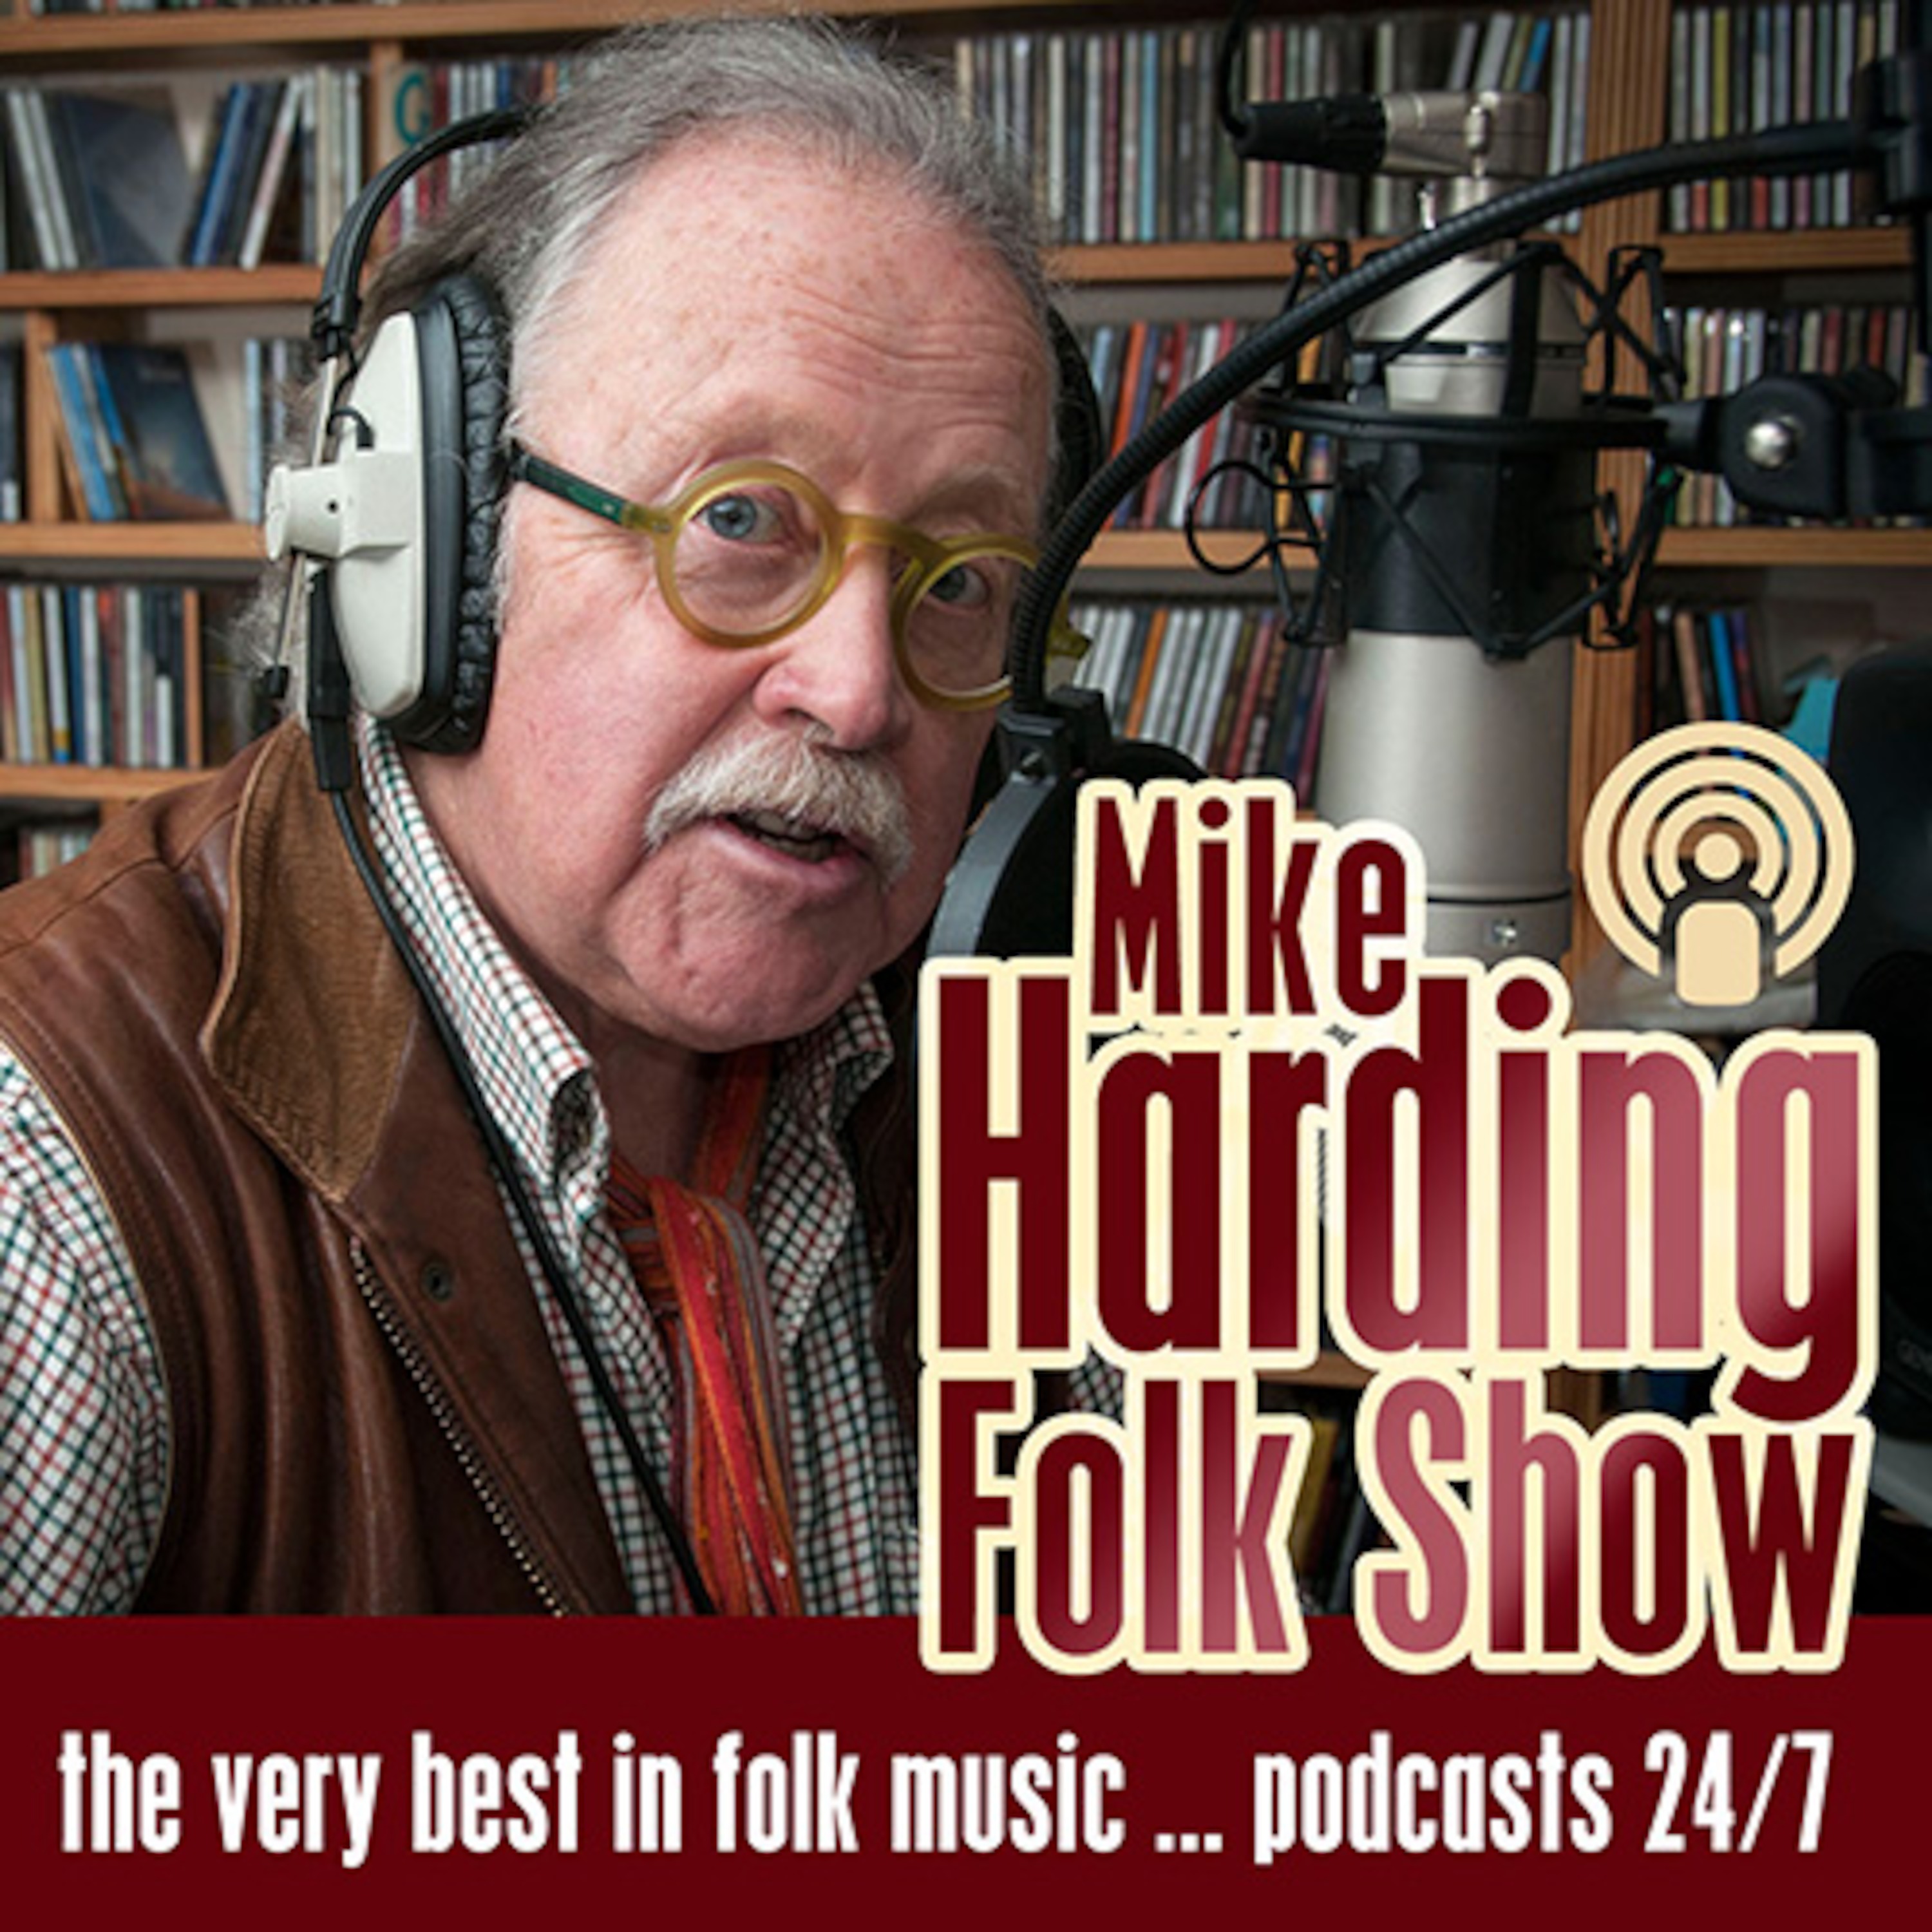 Mike Harding Folk Show 58